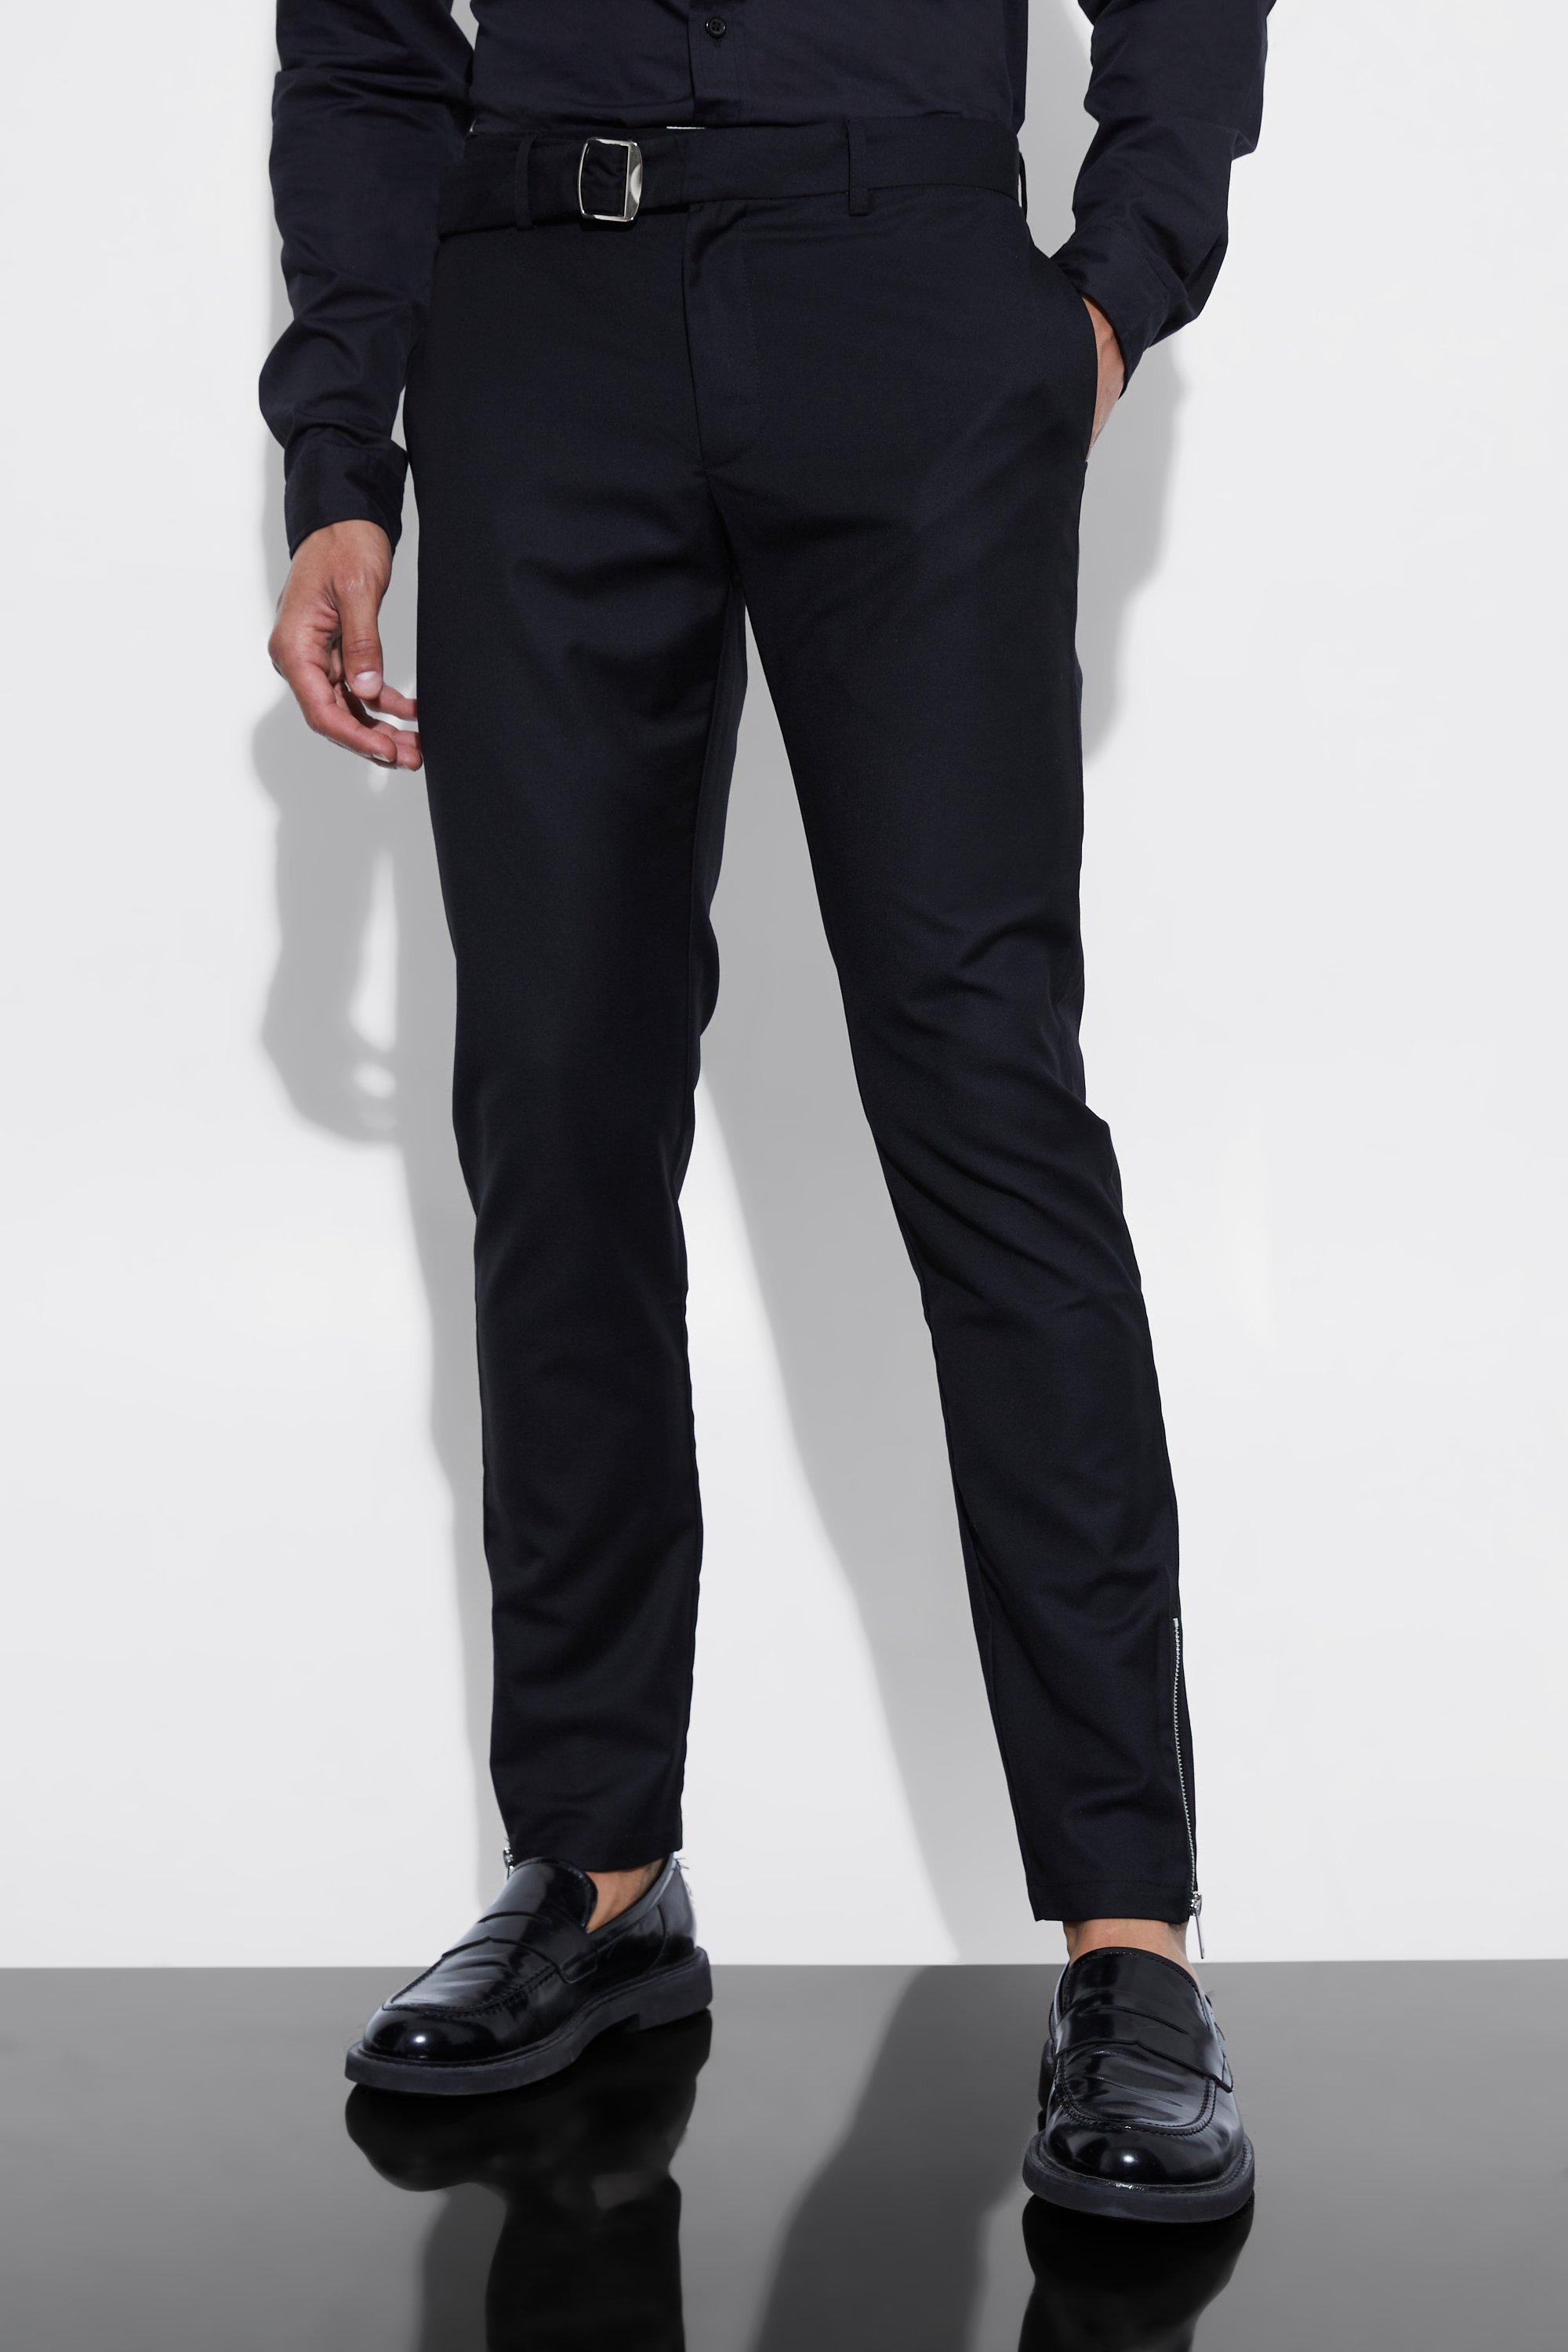 Black Skinny Fit Suit Pants With Belt Detail